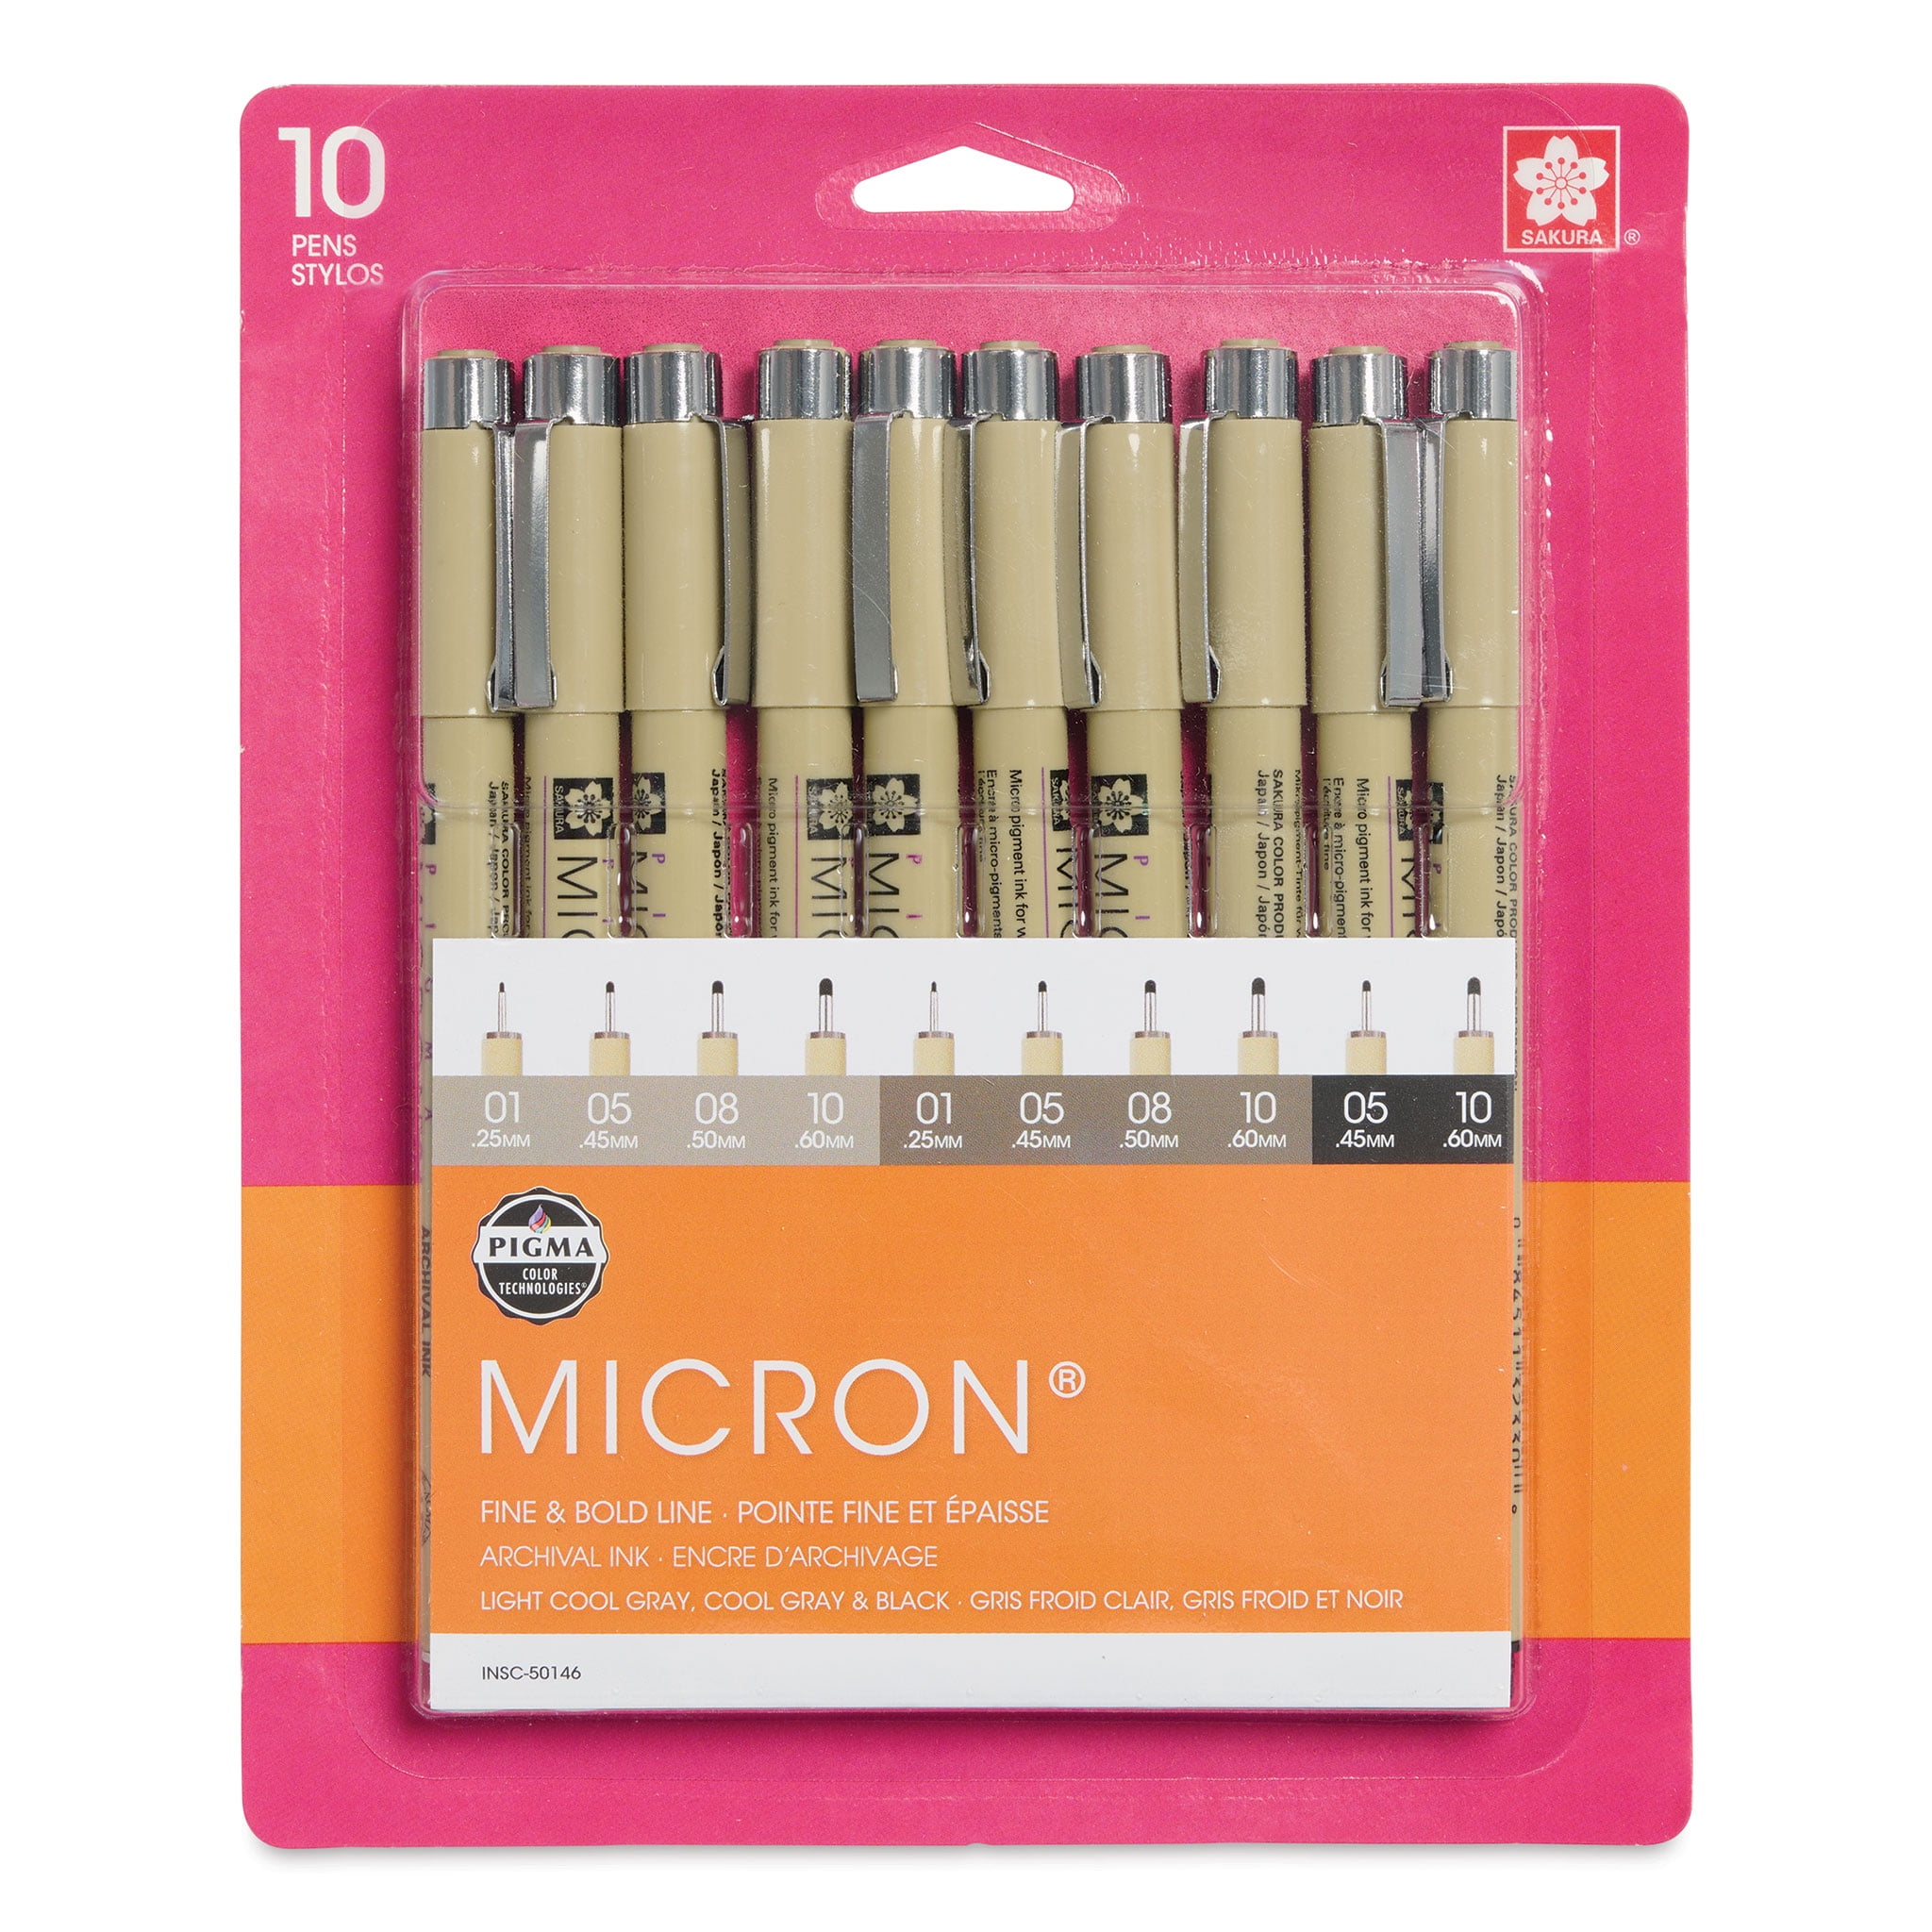 SAKURA PIGMA MICRON 01 Nail Pen - TDI, Inc